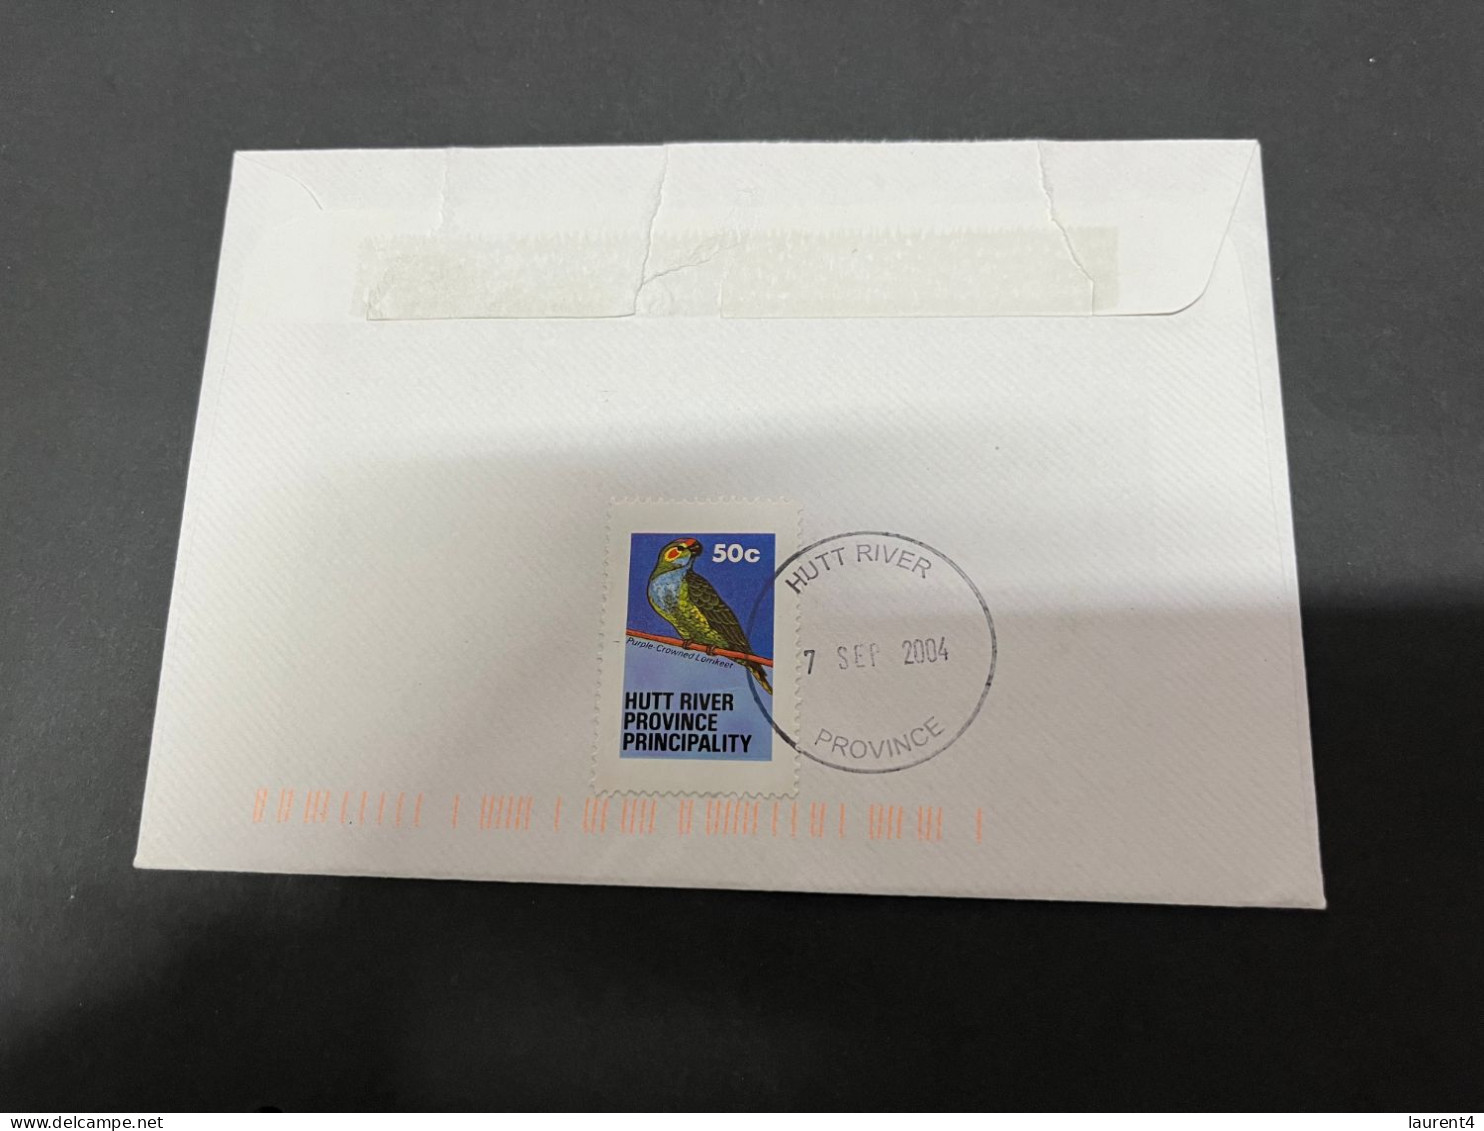 20-7-2023 (2 S 44) Australia Cover + Postcard + Blank Cover Large 18 X 27 Cm) - Hutt River Province (WA) 3 Items - Cinderella